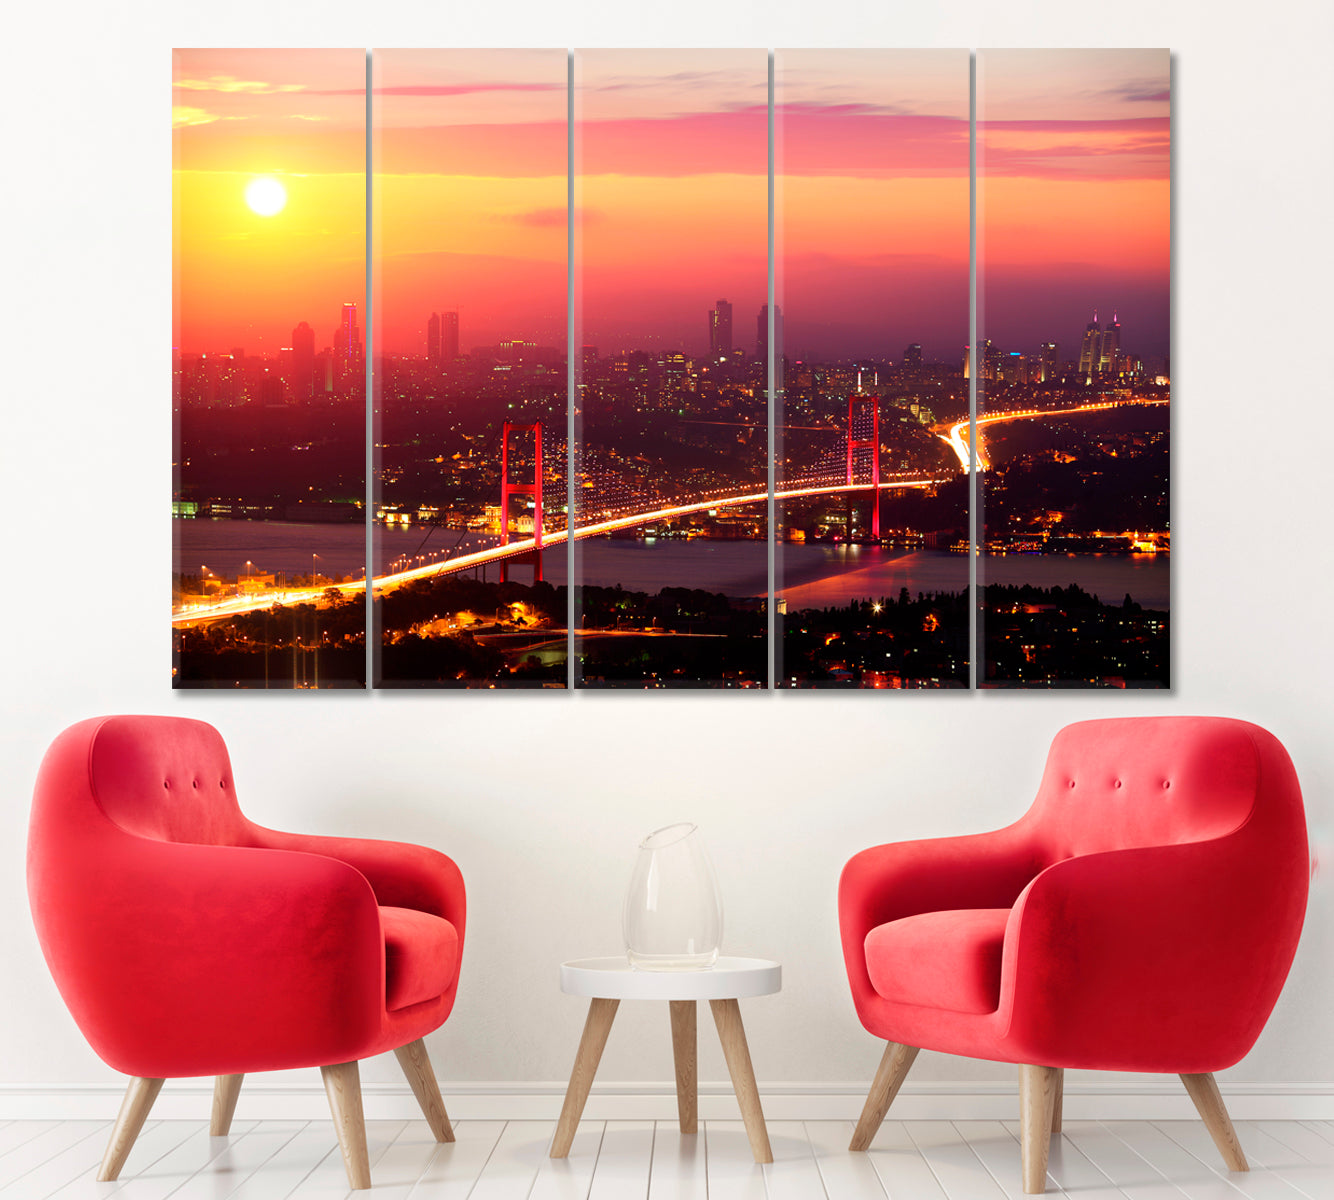 Turkey and Bosphorus Bridge at Sunset Canvas Print ArtLexy 5 Panels 36"x24" inches 